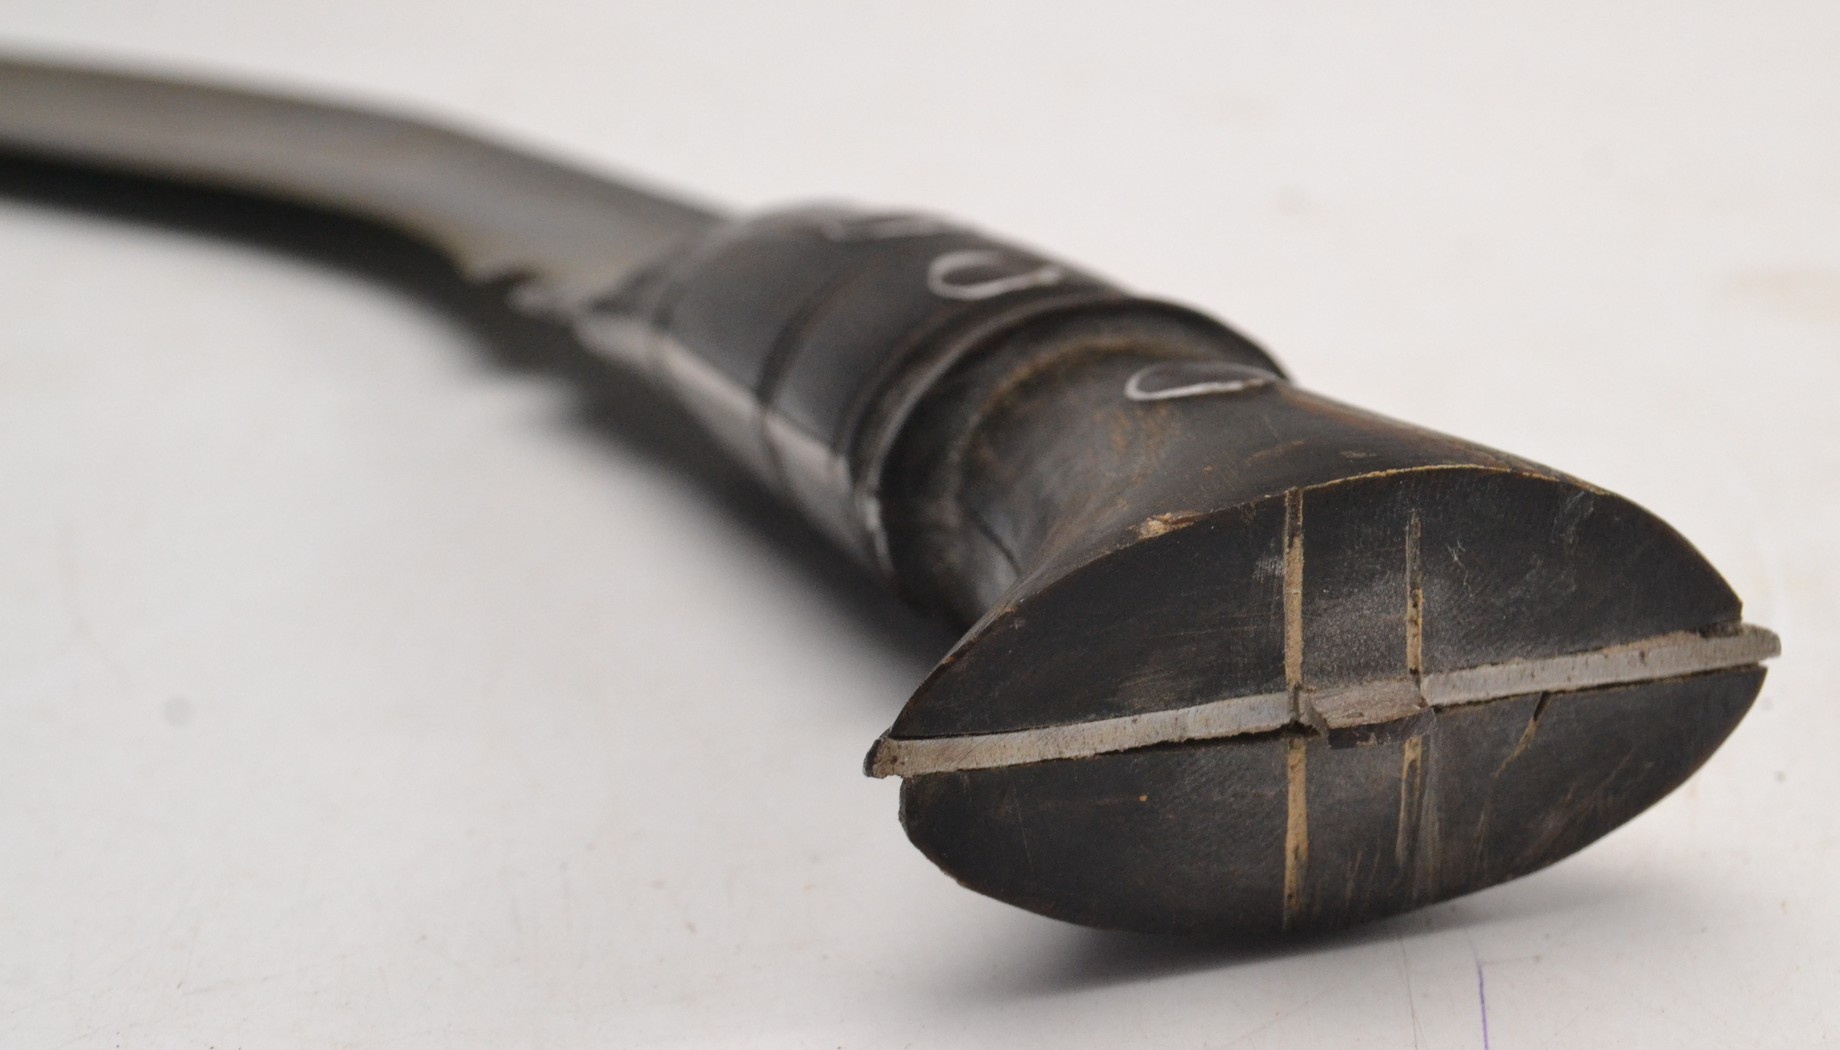 Gurkha Kukri knife with black leather sheath, blade length 30cm approx. - Image 10 of 10